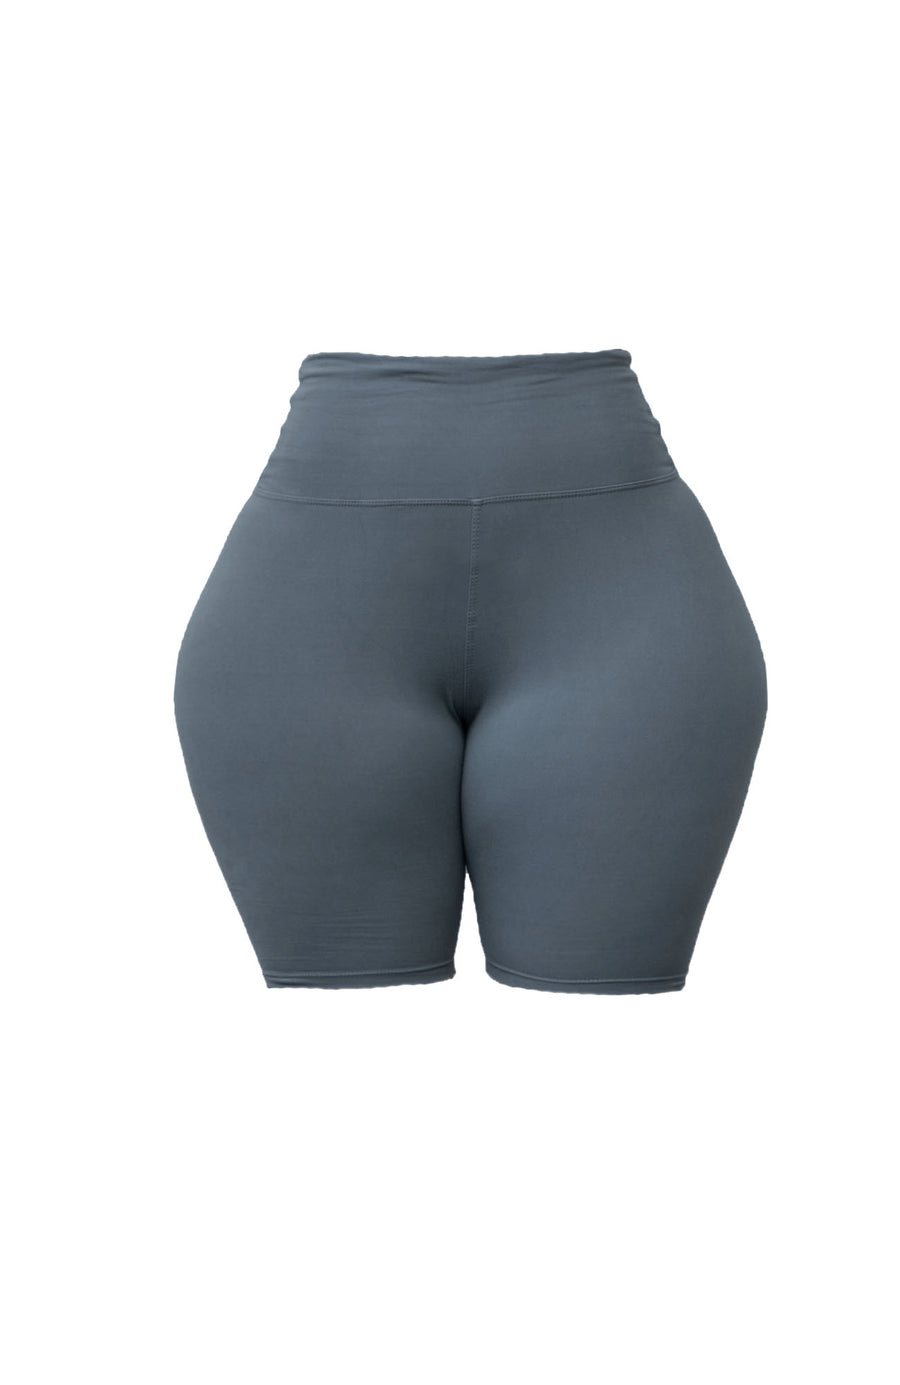 Curvy Yoga Short (gray)